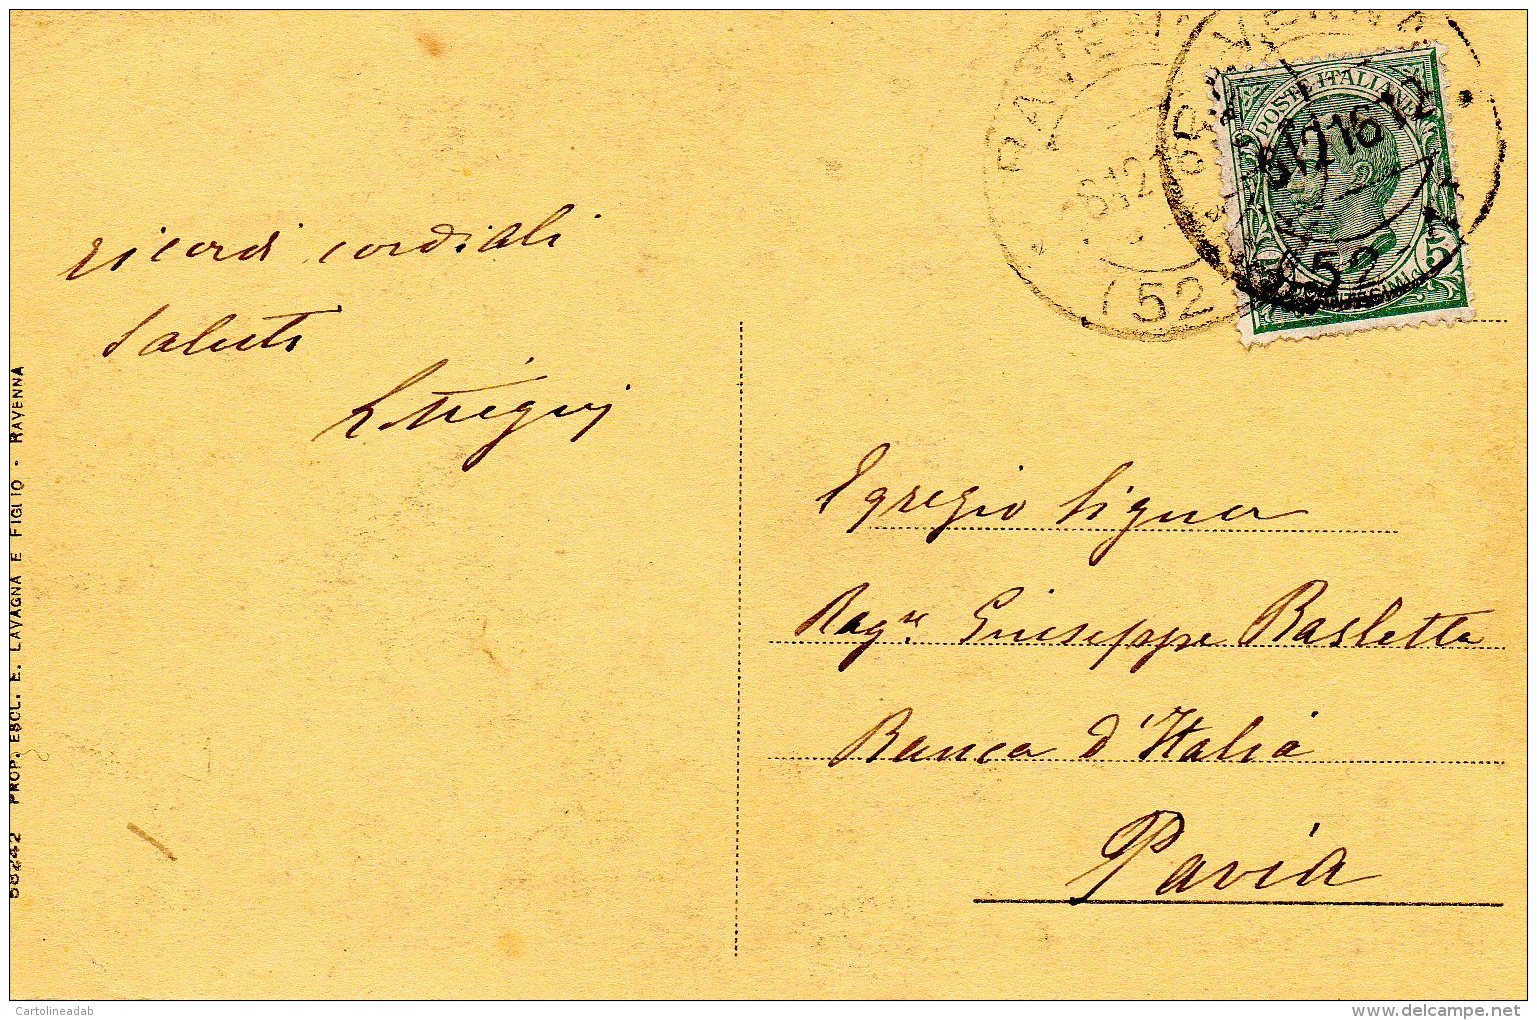 [DC9928] CPA - RAVENNA - PIAZZA VITTORIO EMANUELE - ANTICO RACCORDO CONGIUNGENTE  - Viaggiata 1916 - Old Postcard - Ravenna